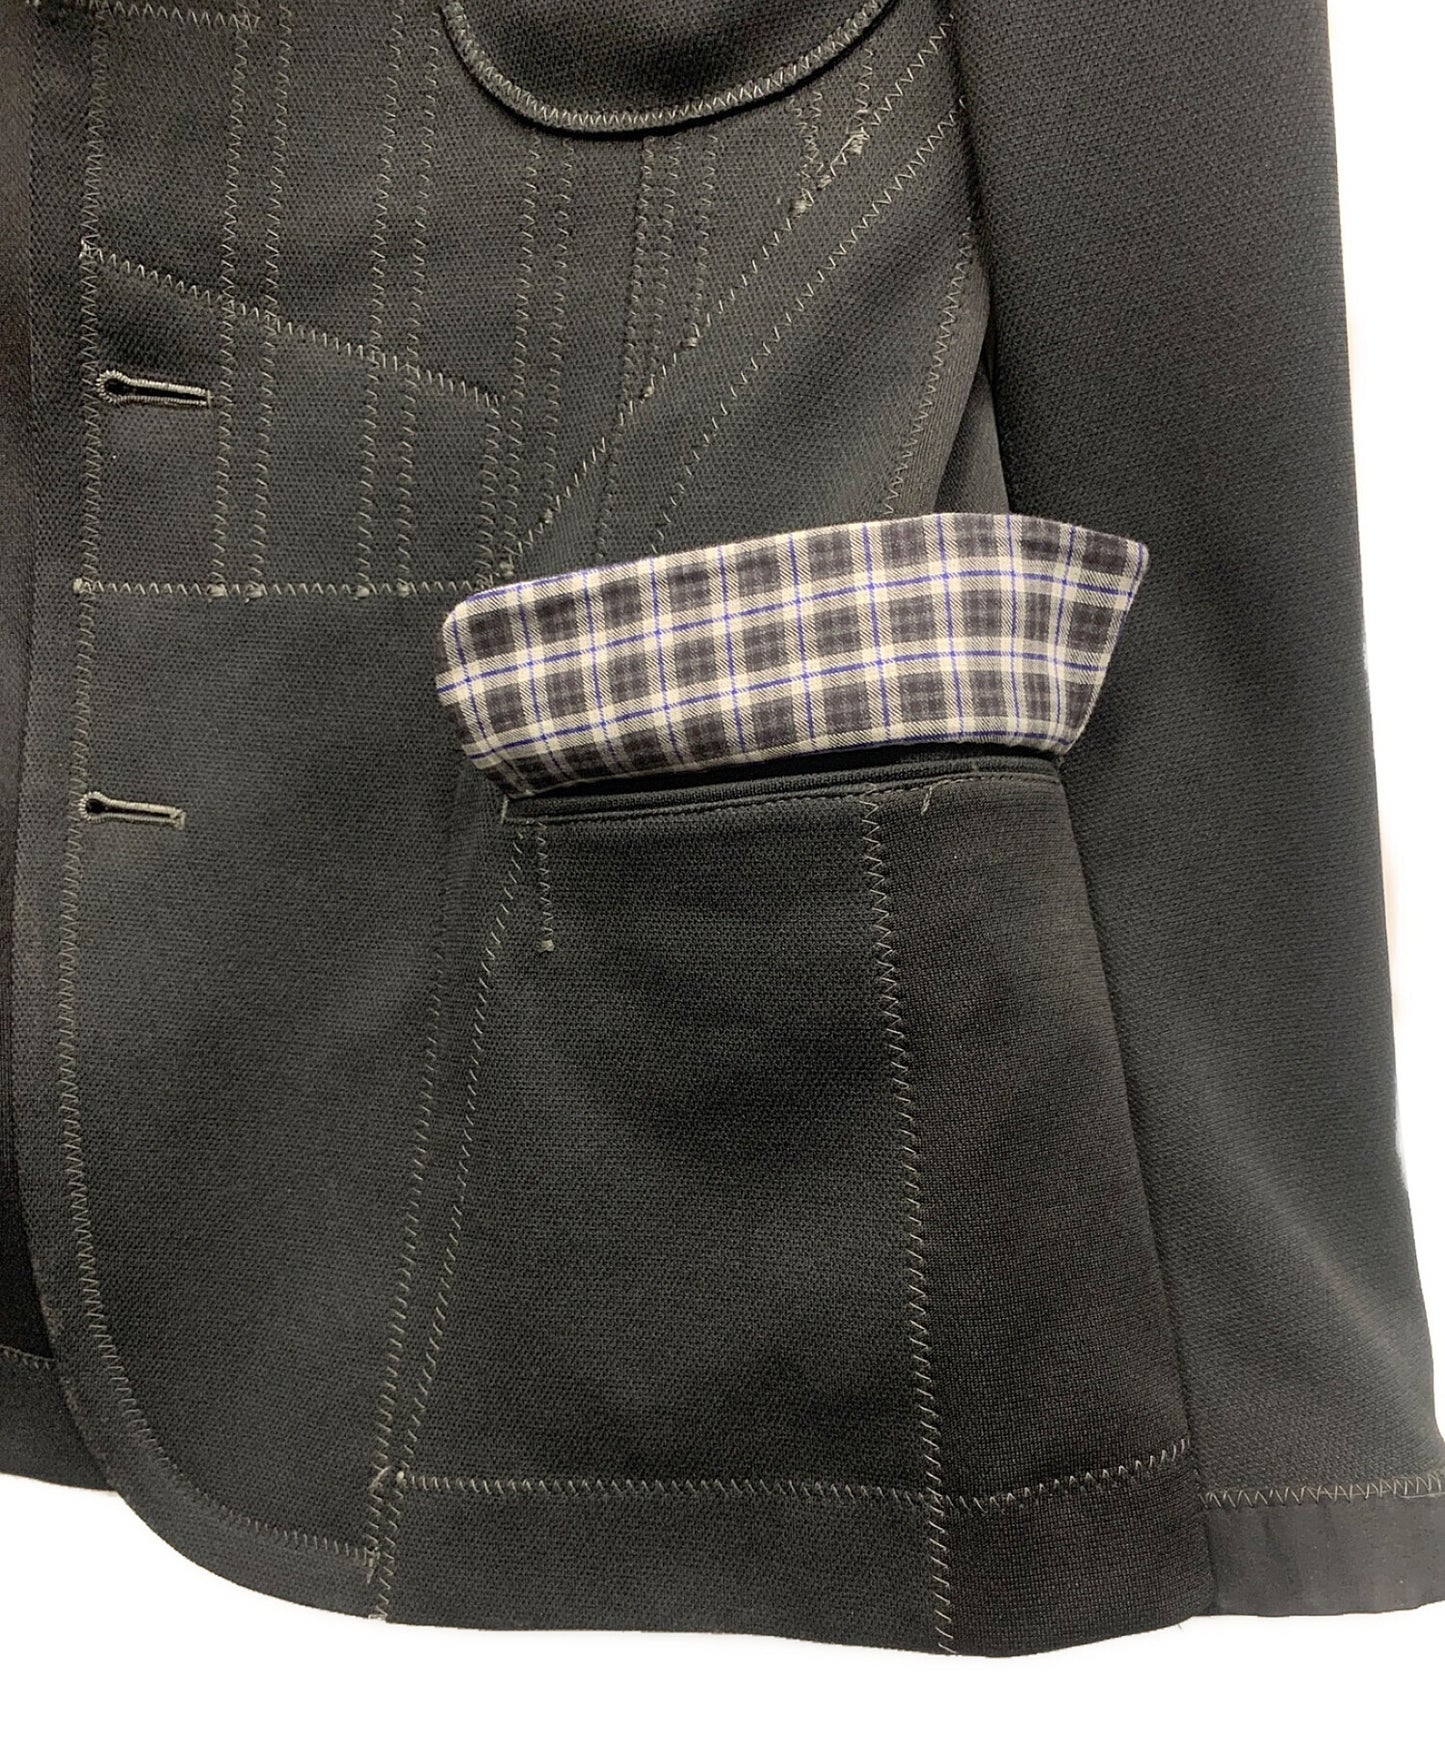 [Pre-owned] eYe COMME des GARCONS JUNYAWATANABE MAN tailored jacket WC-J905